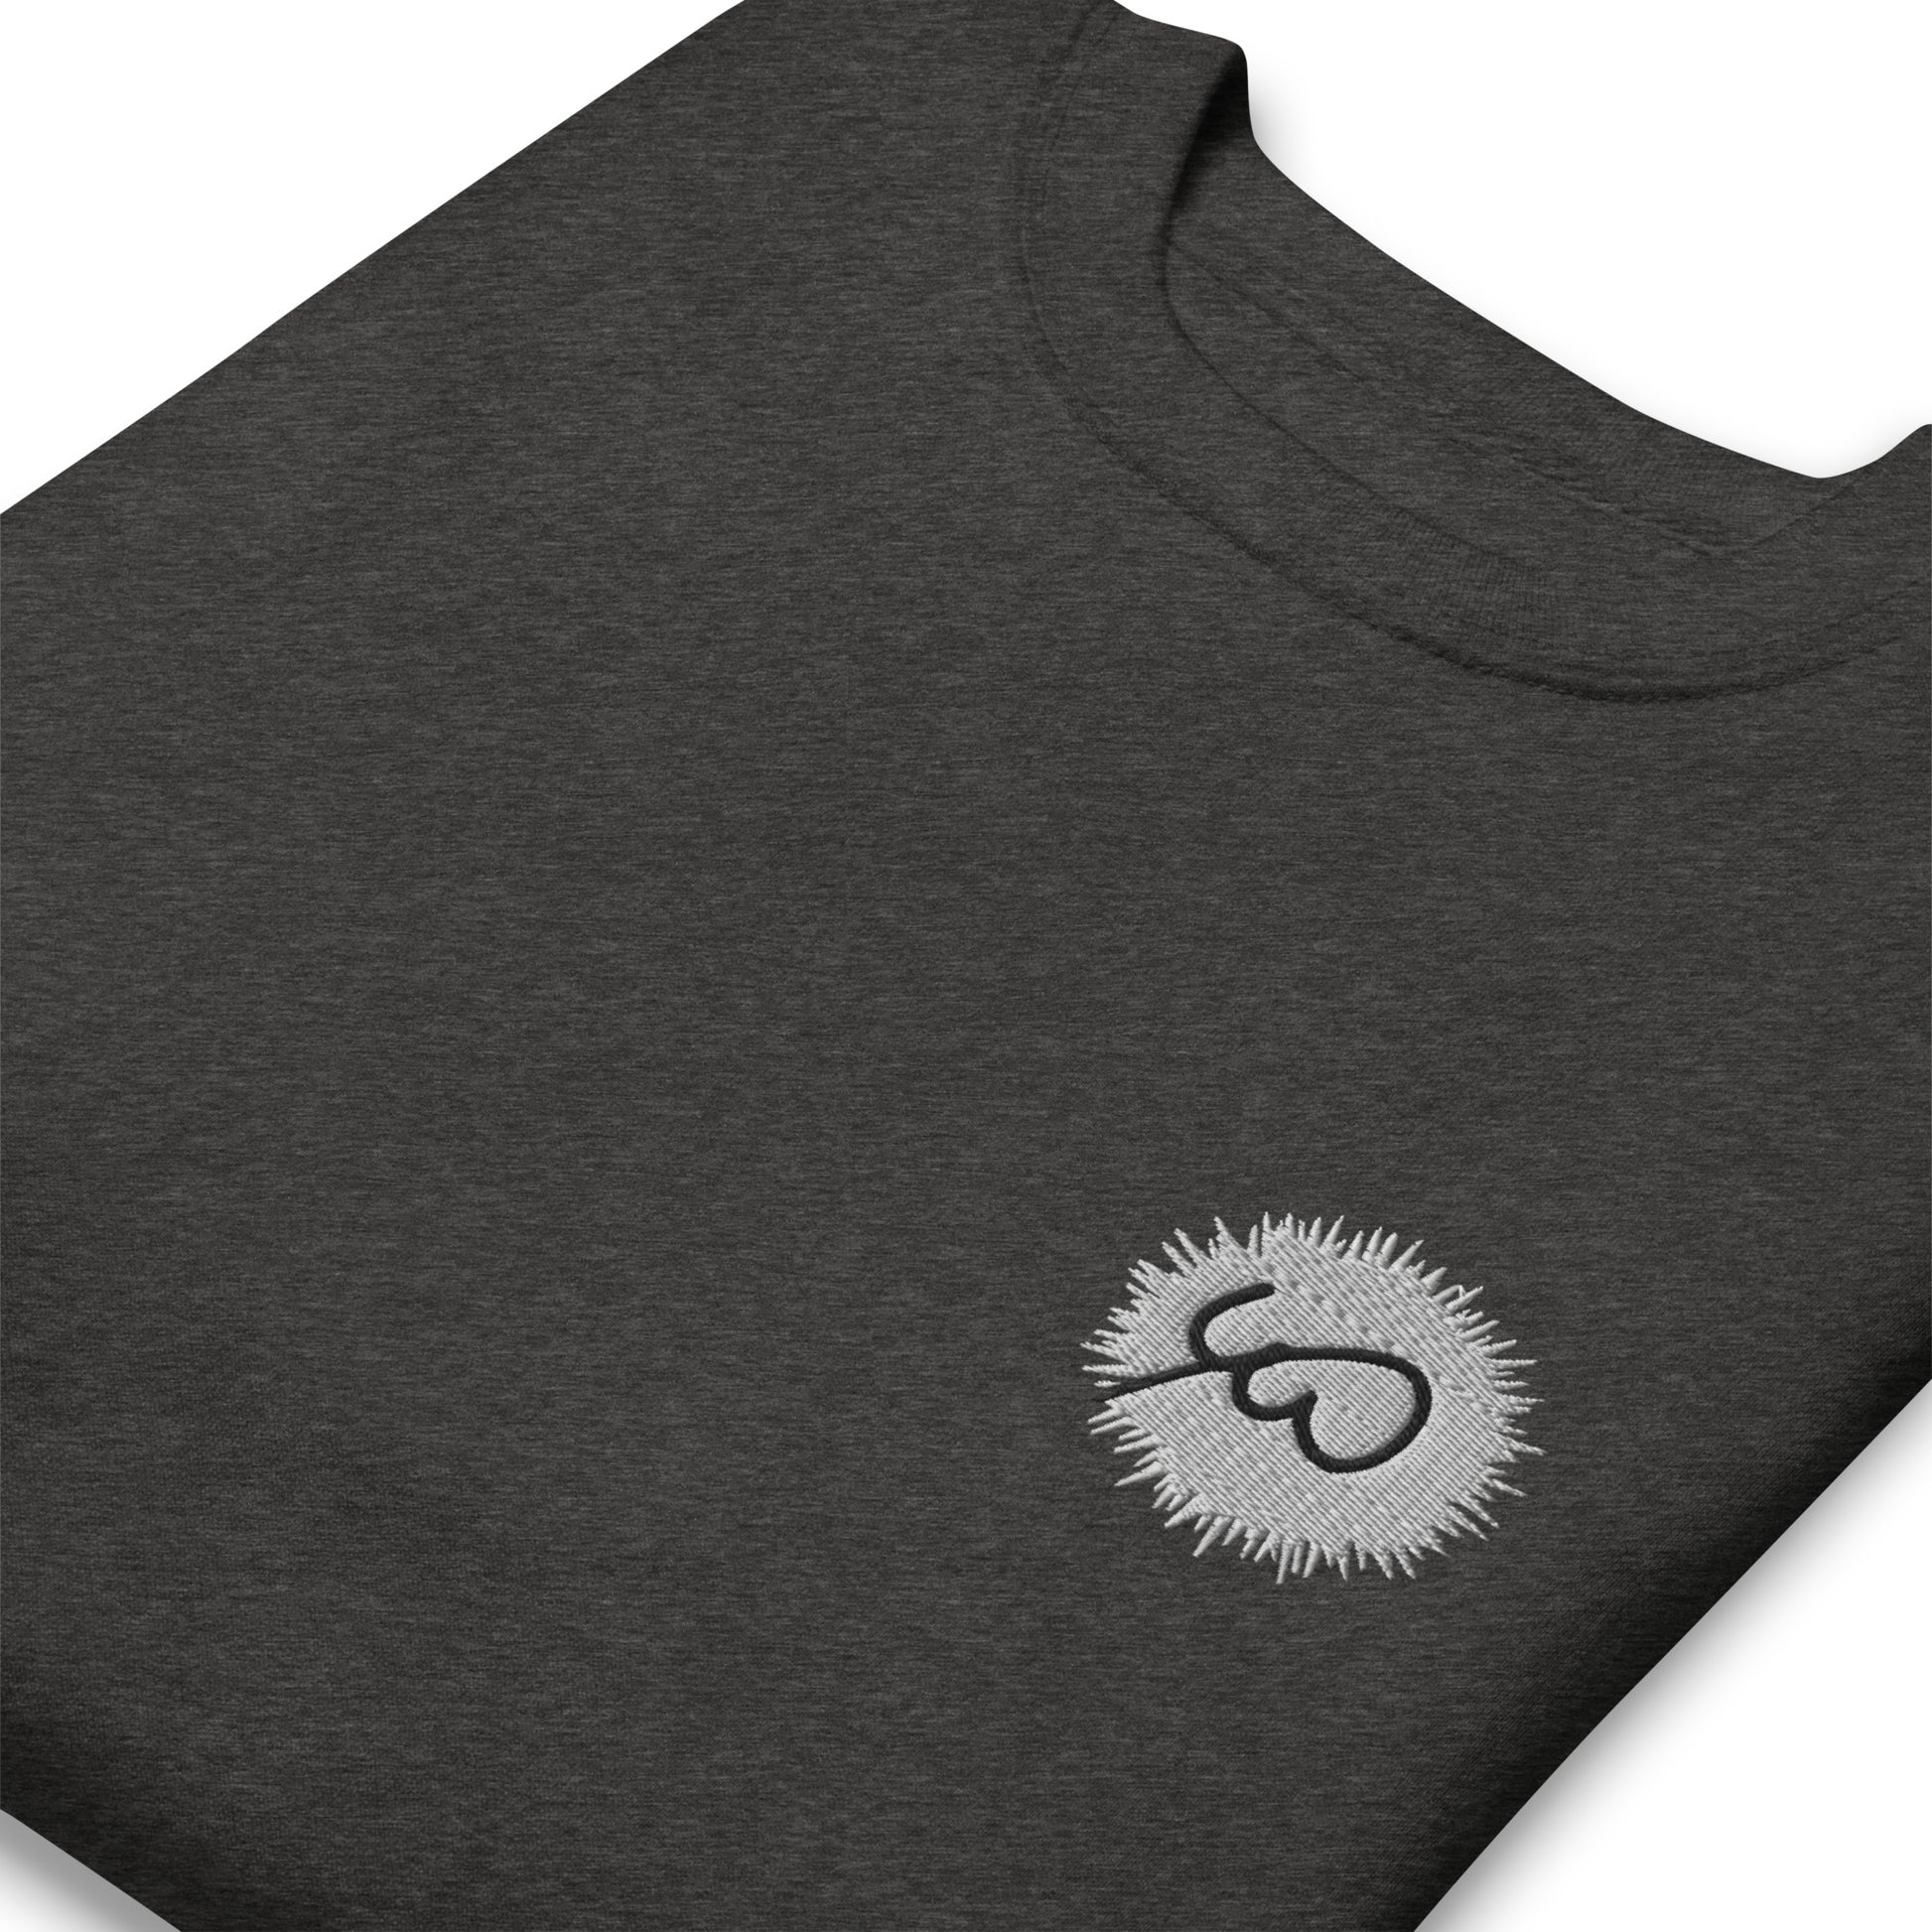 Dark Gray Unisex Premium Sweatshirt -Front design with Black and White Embroidery of Uniwari Logo